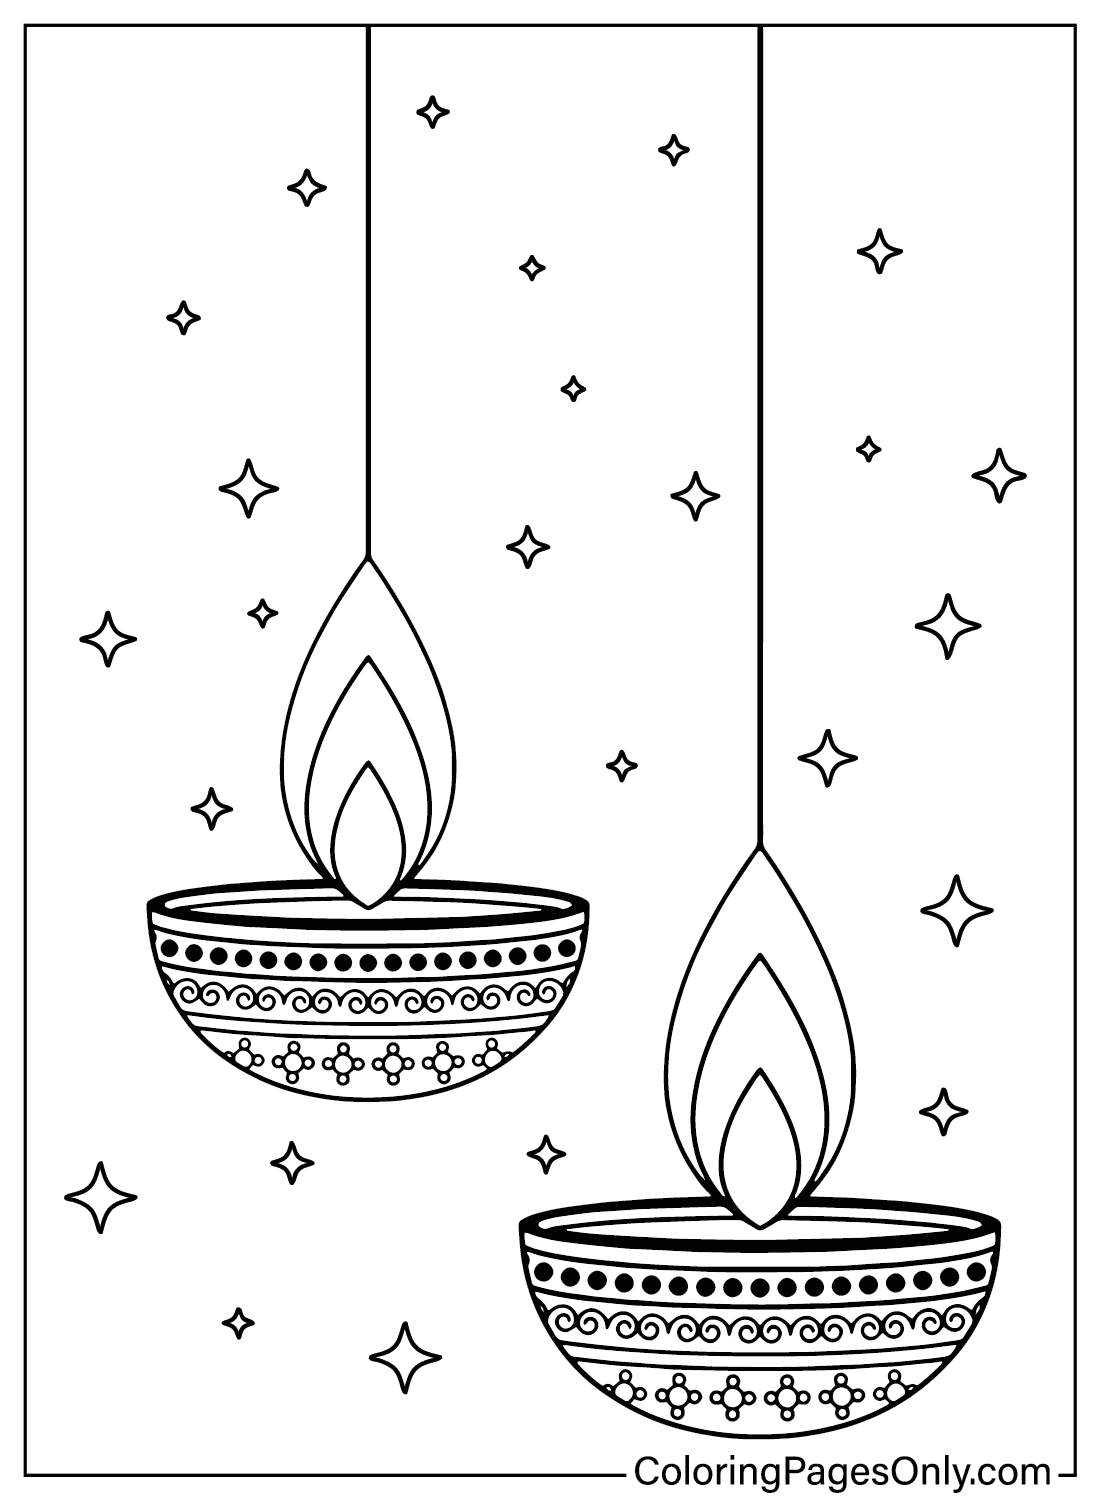 Diwali Coloring Page Free Printable from Diwali